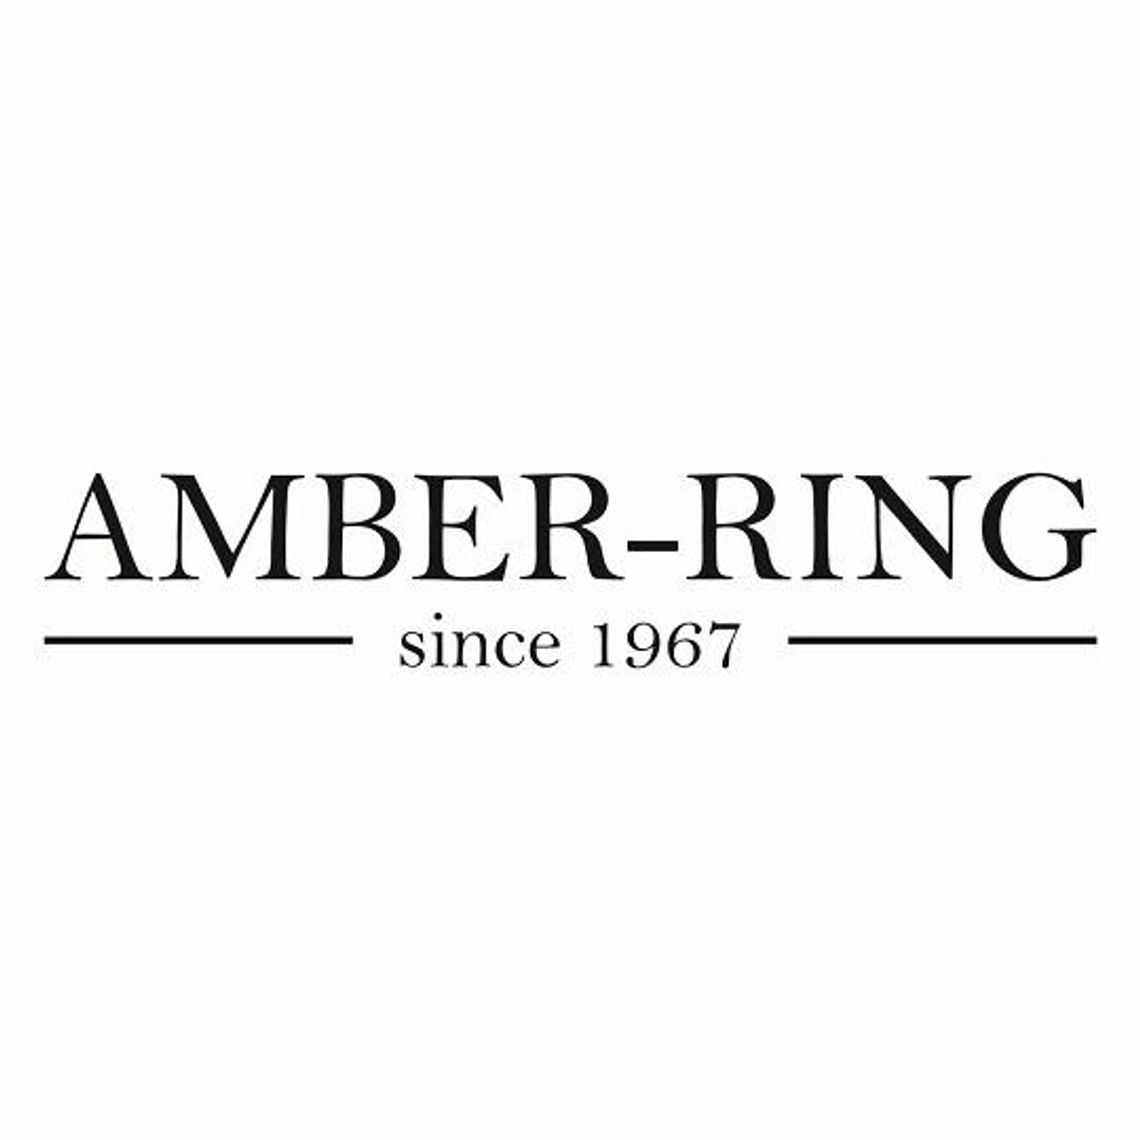 Amber-Ring - modna biżuteria z bursztynem